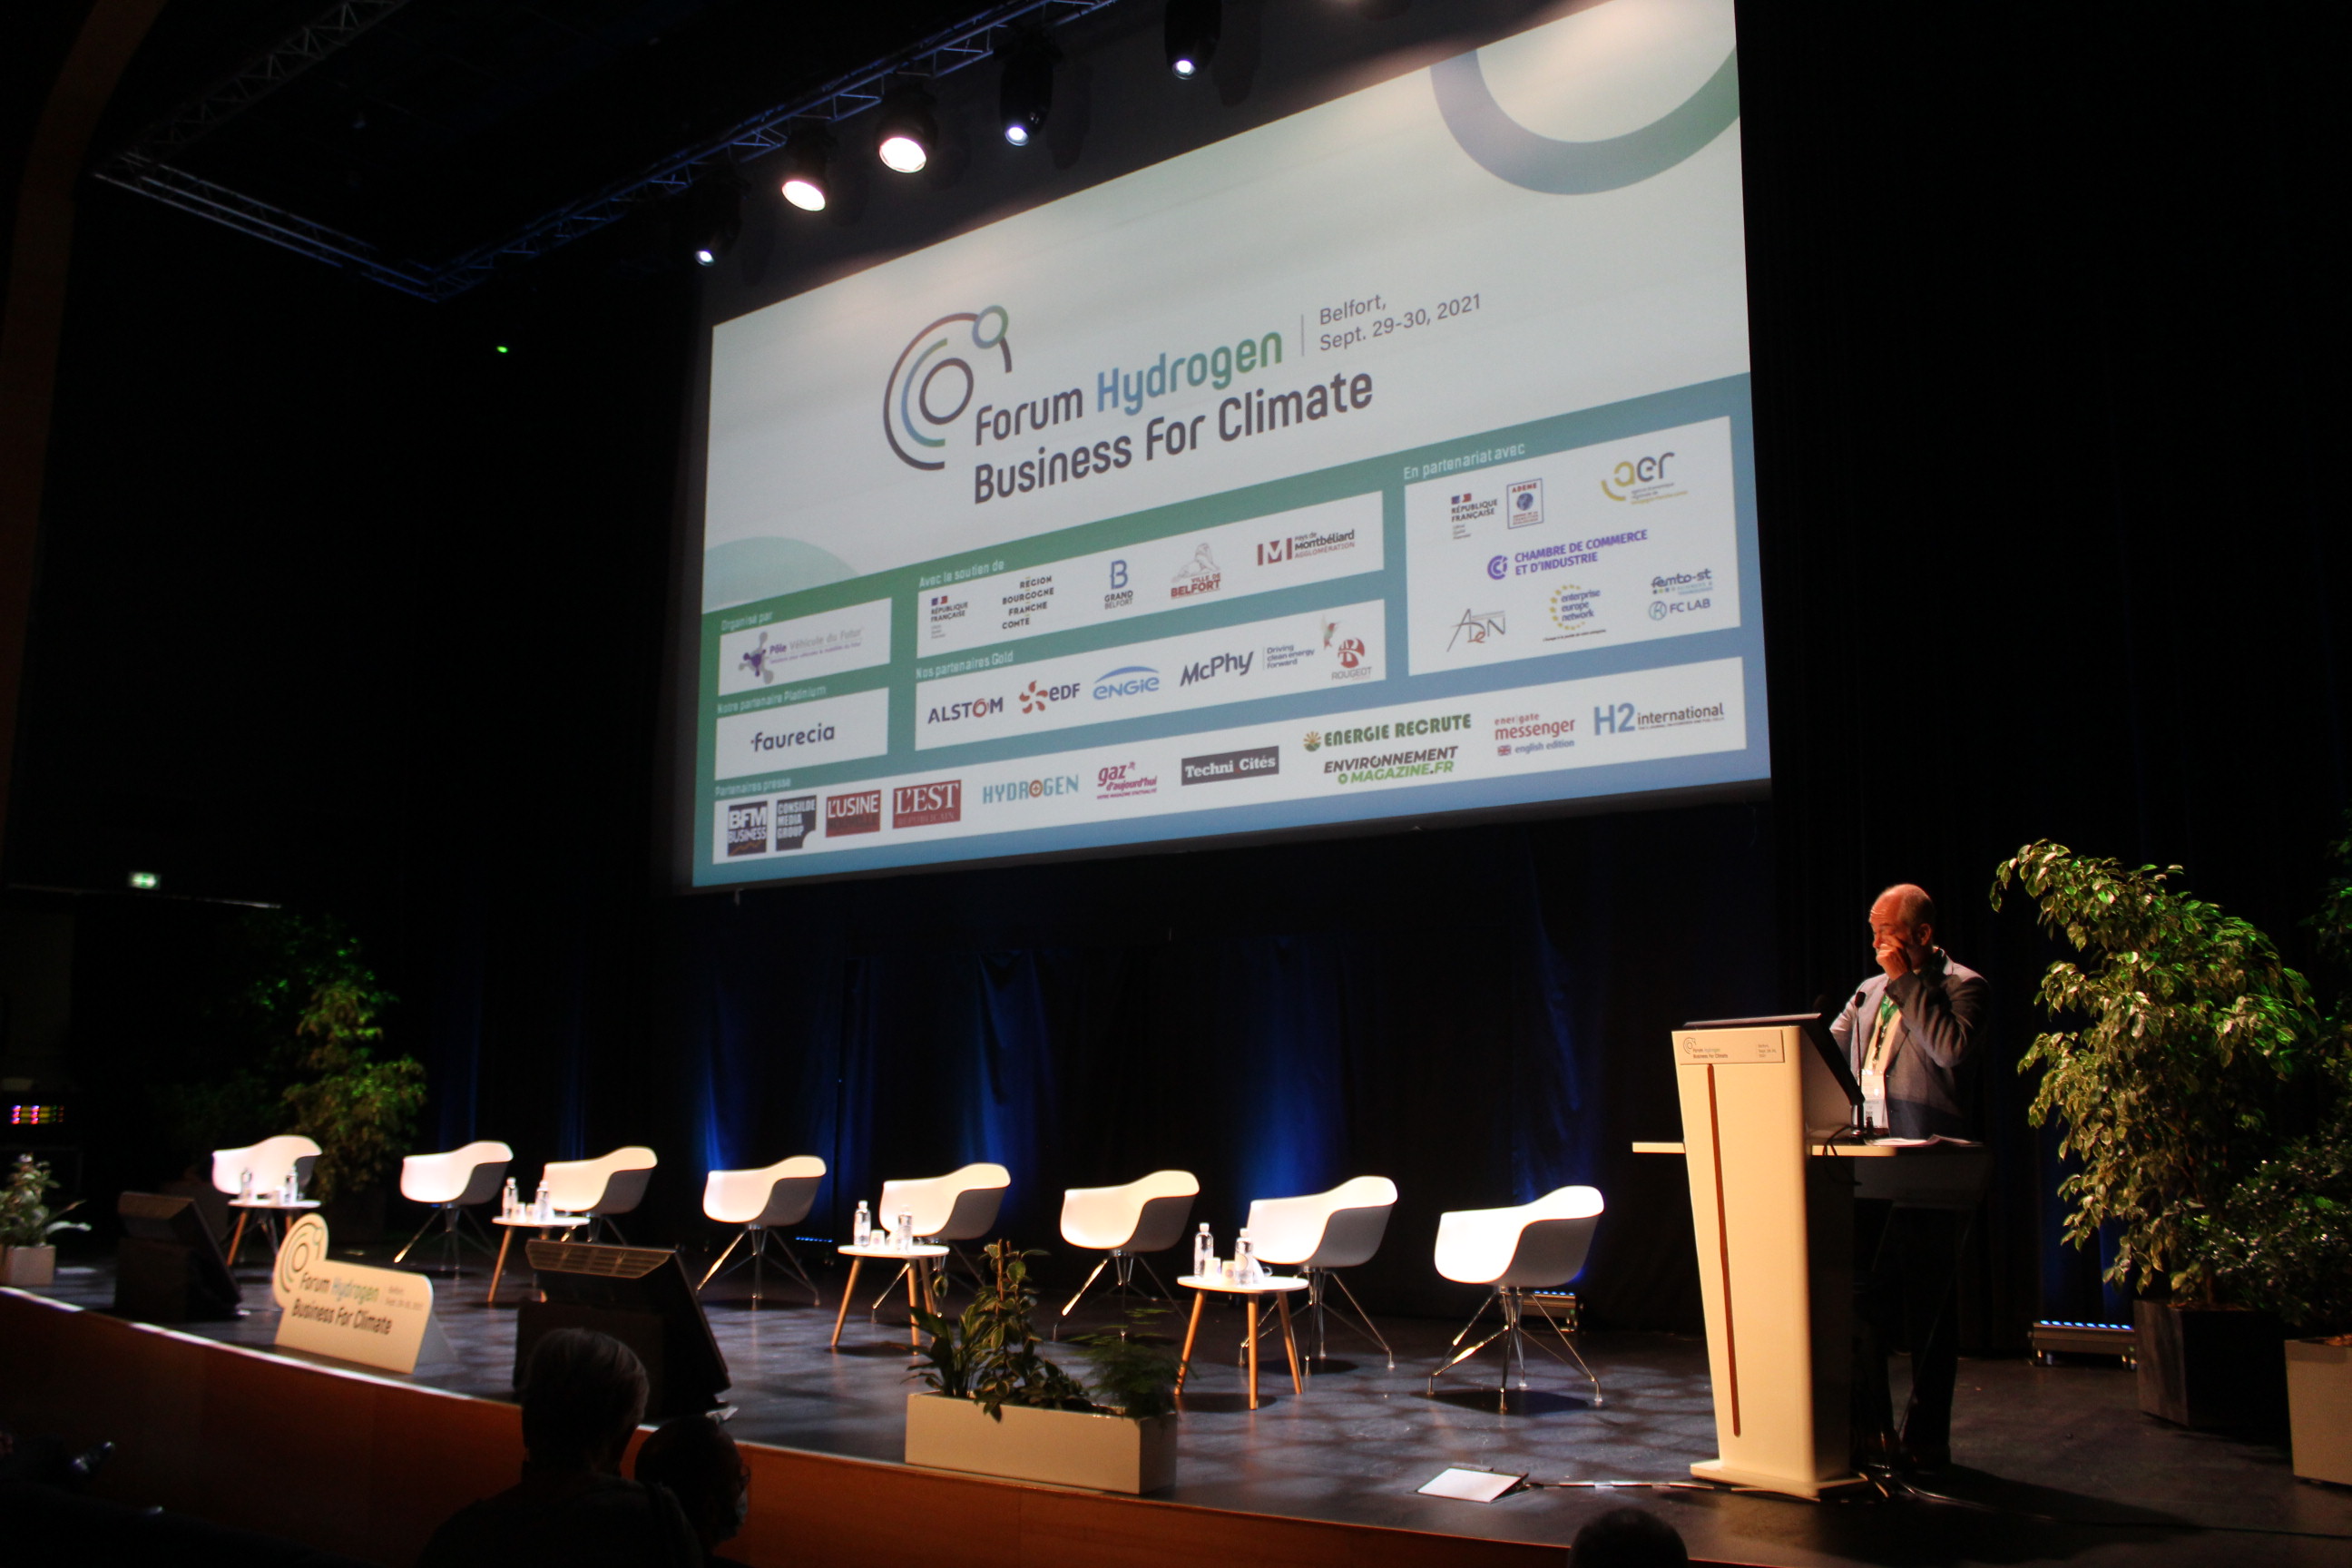 Forum Hydrogen, Business For Climate, Belfort, Sep. 29-30, 2021